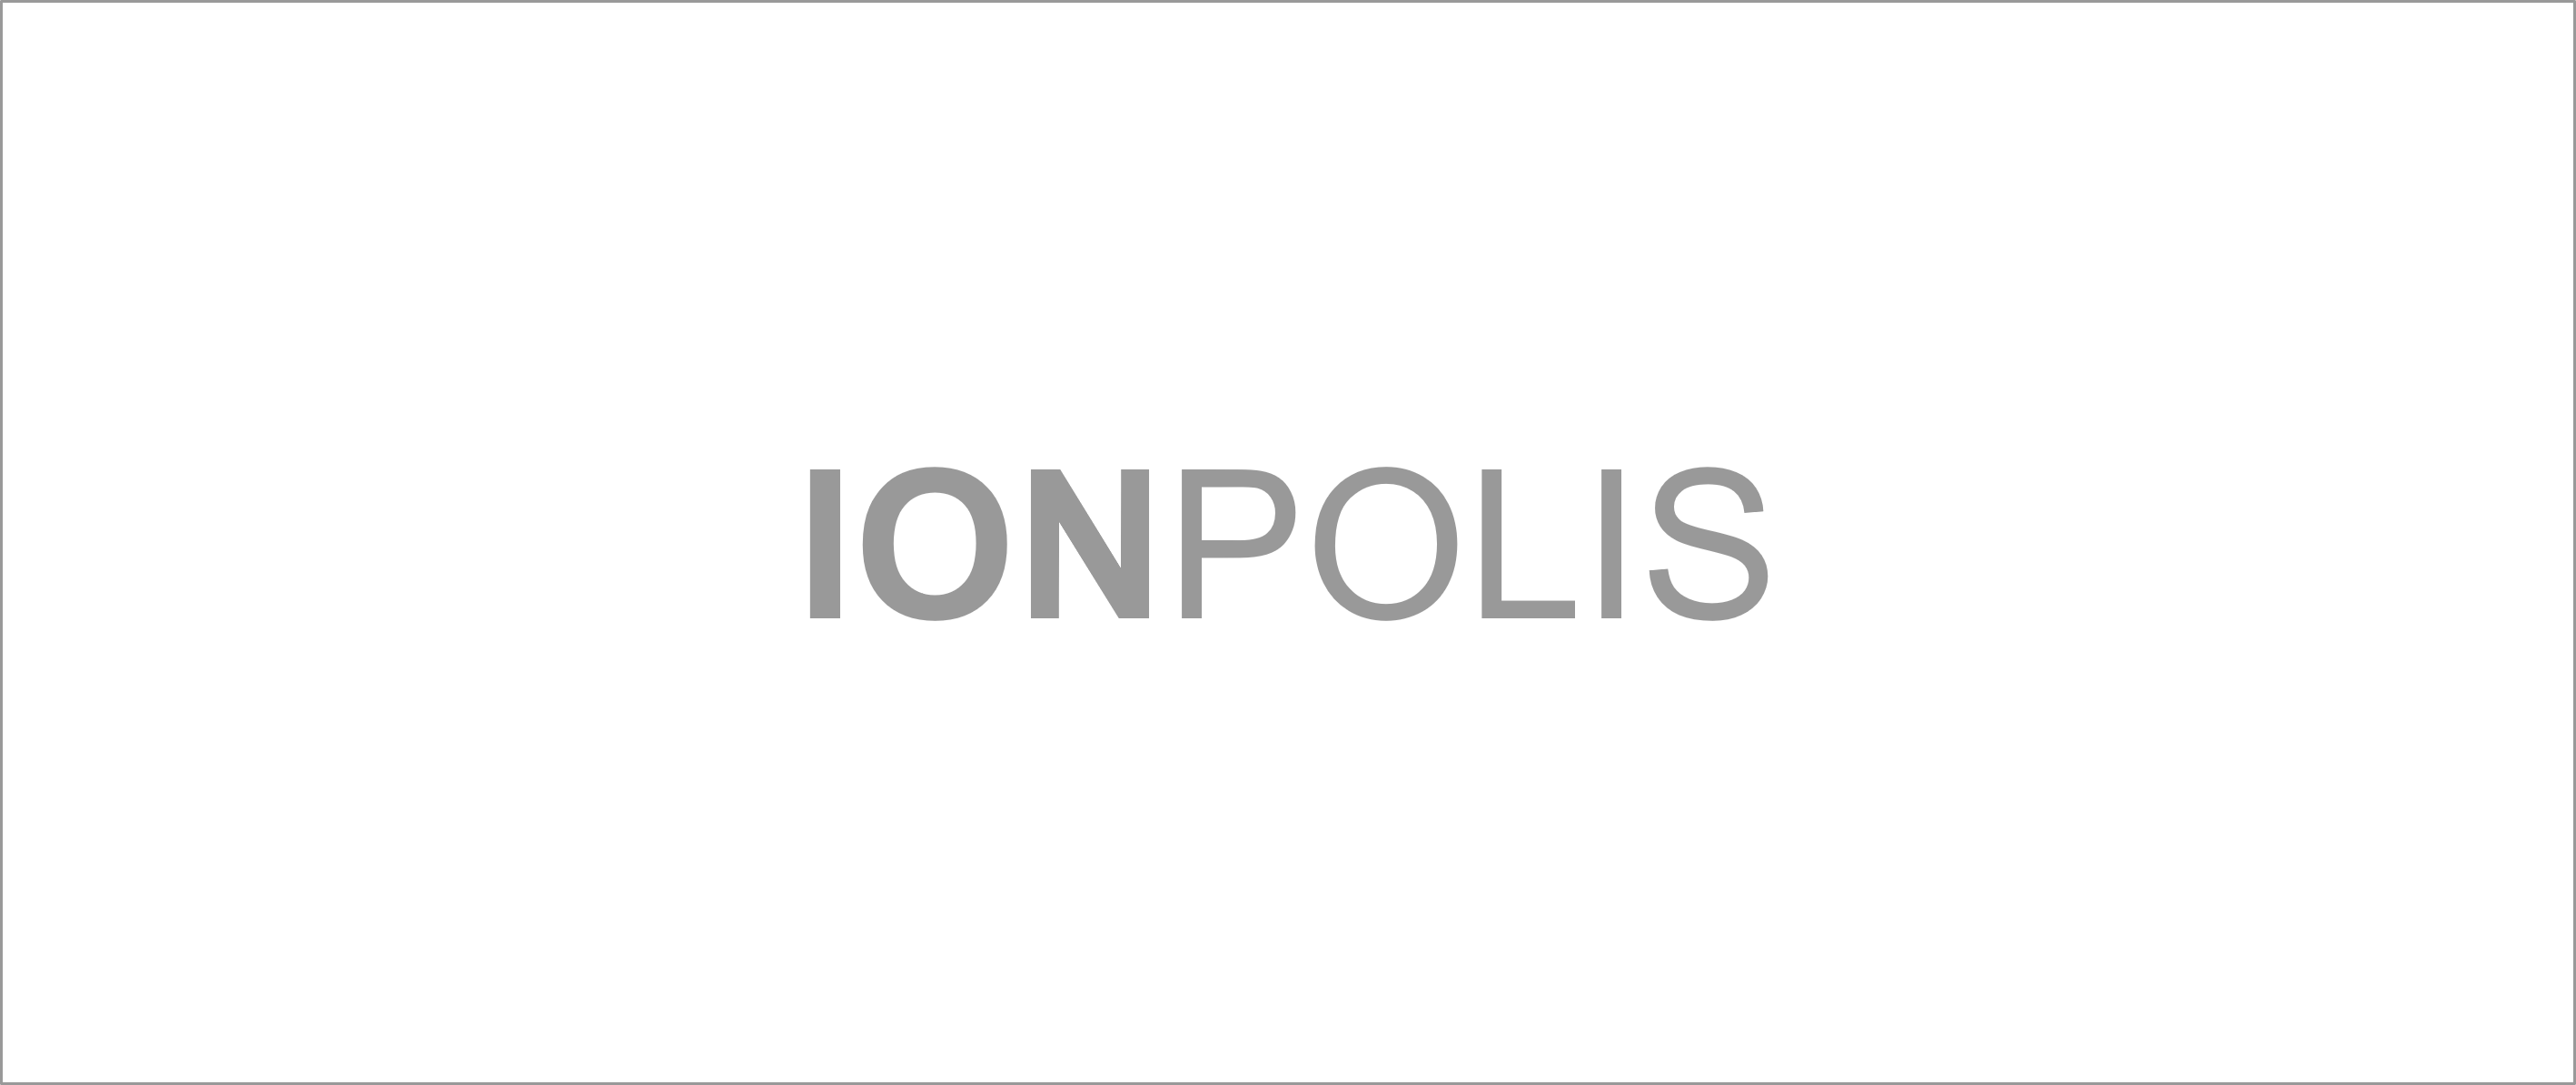 IonPolis